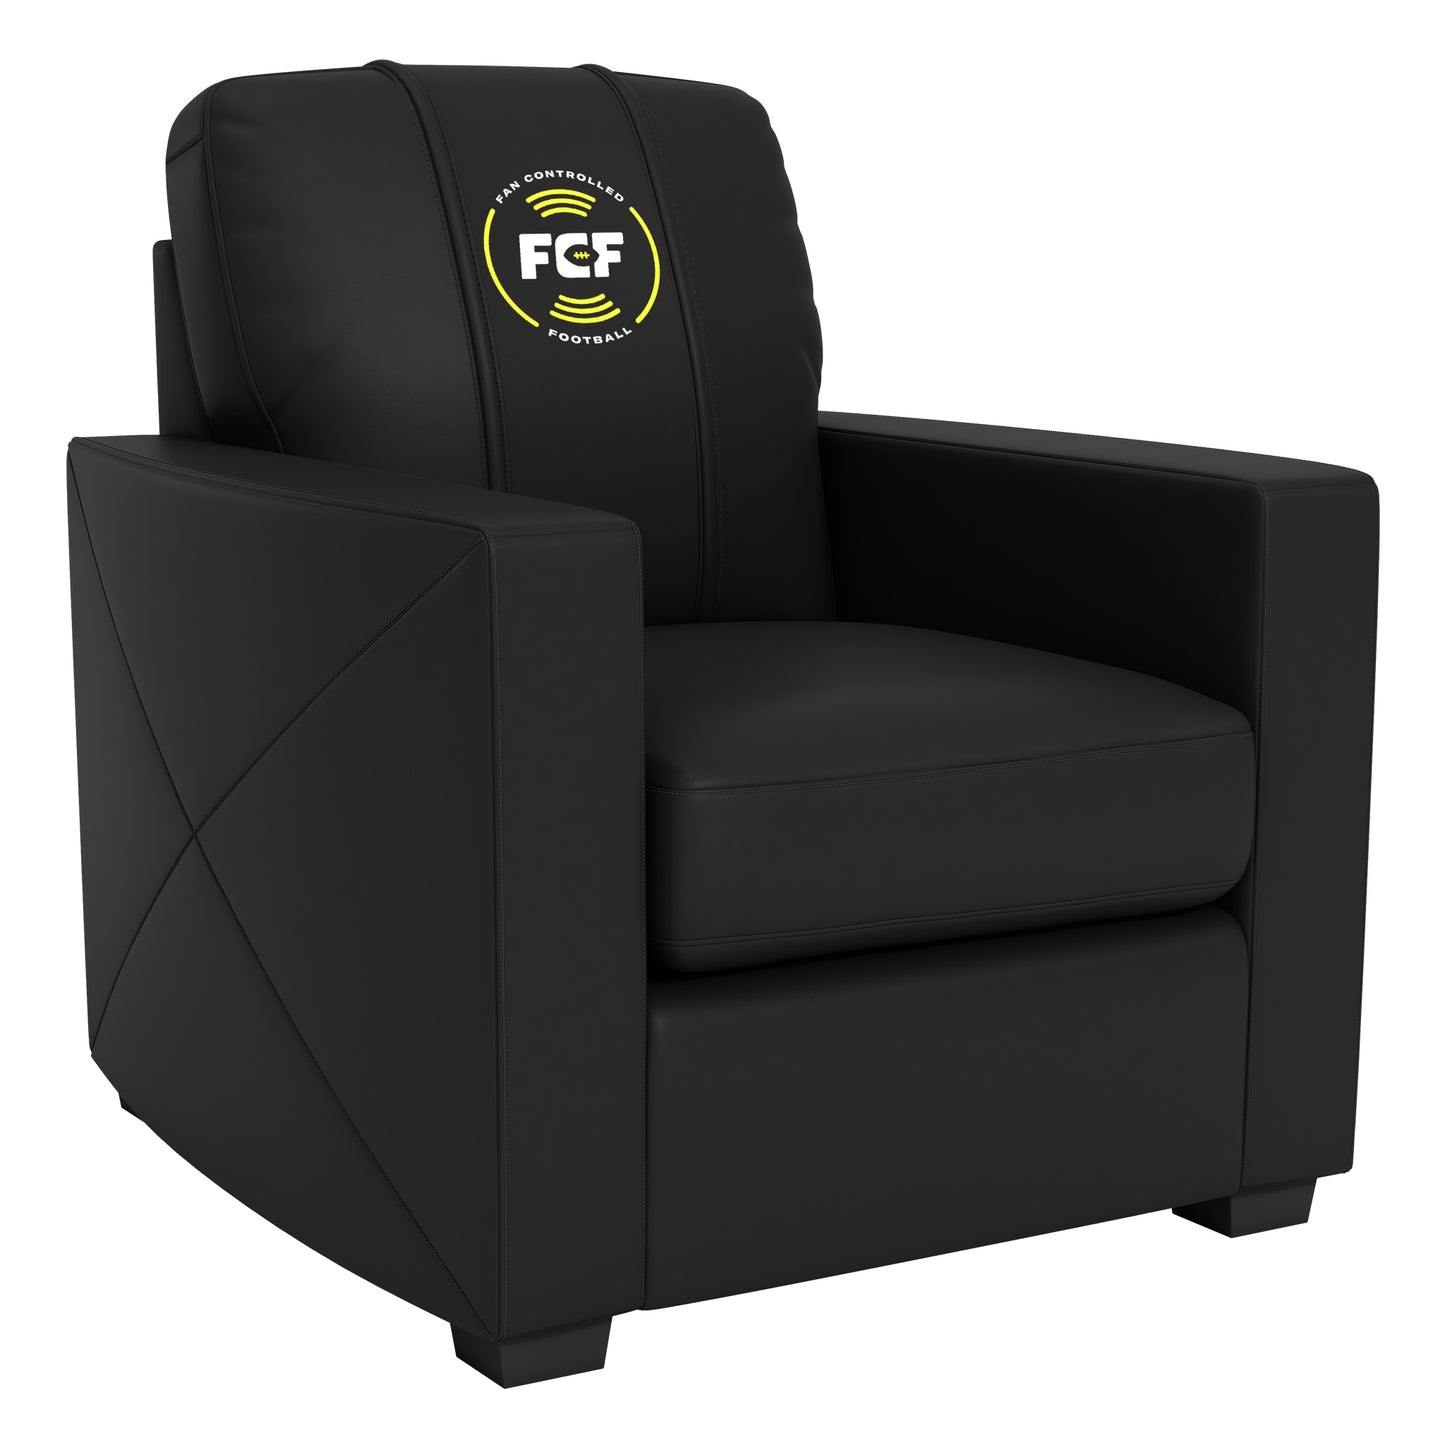 Silver Club Chair with Fan Controlled Football League Logo